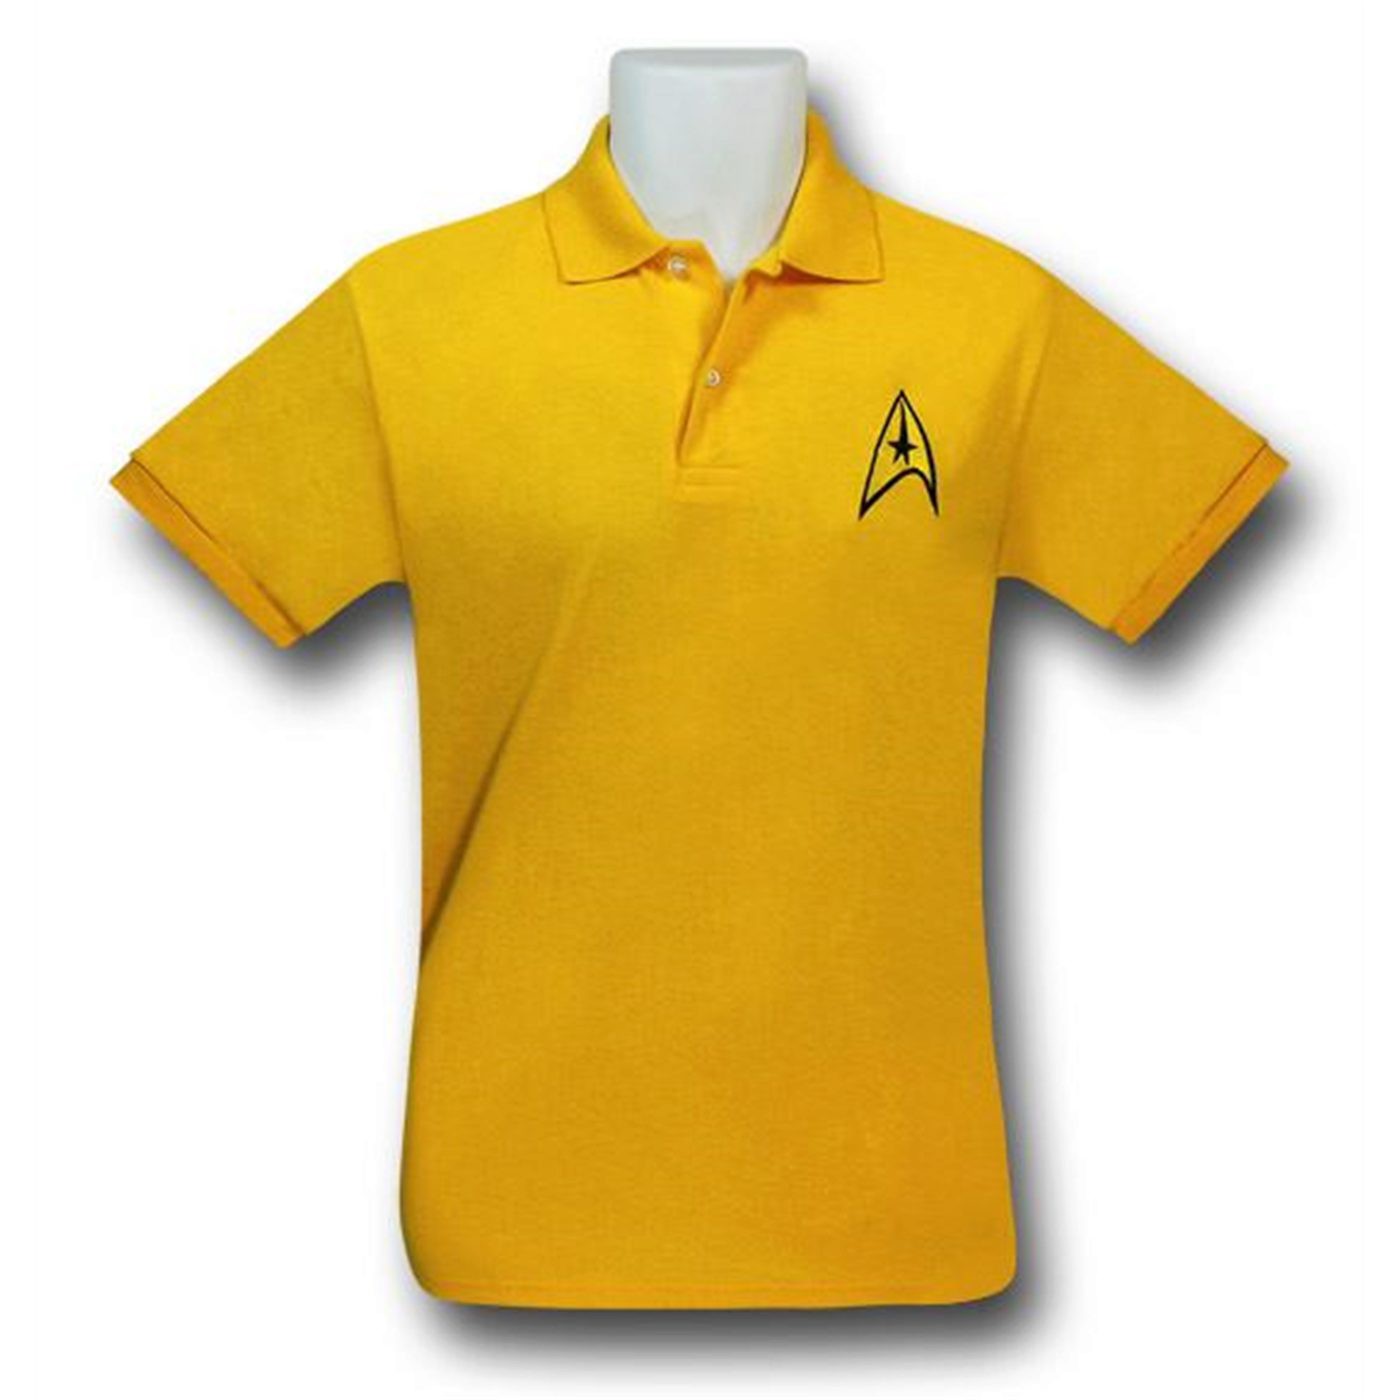 Star Trek Command Uniform Polo Shirt